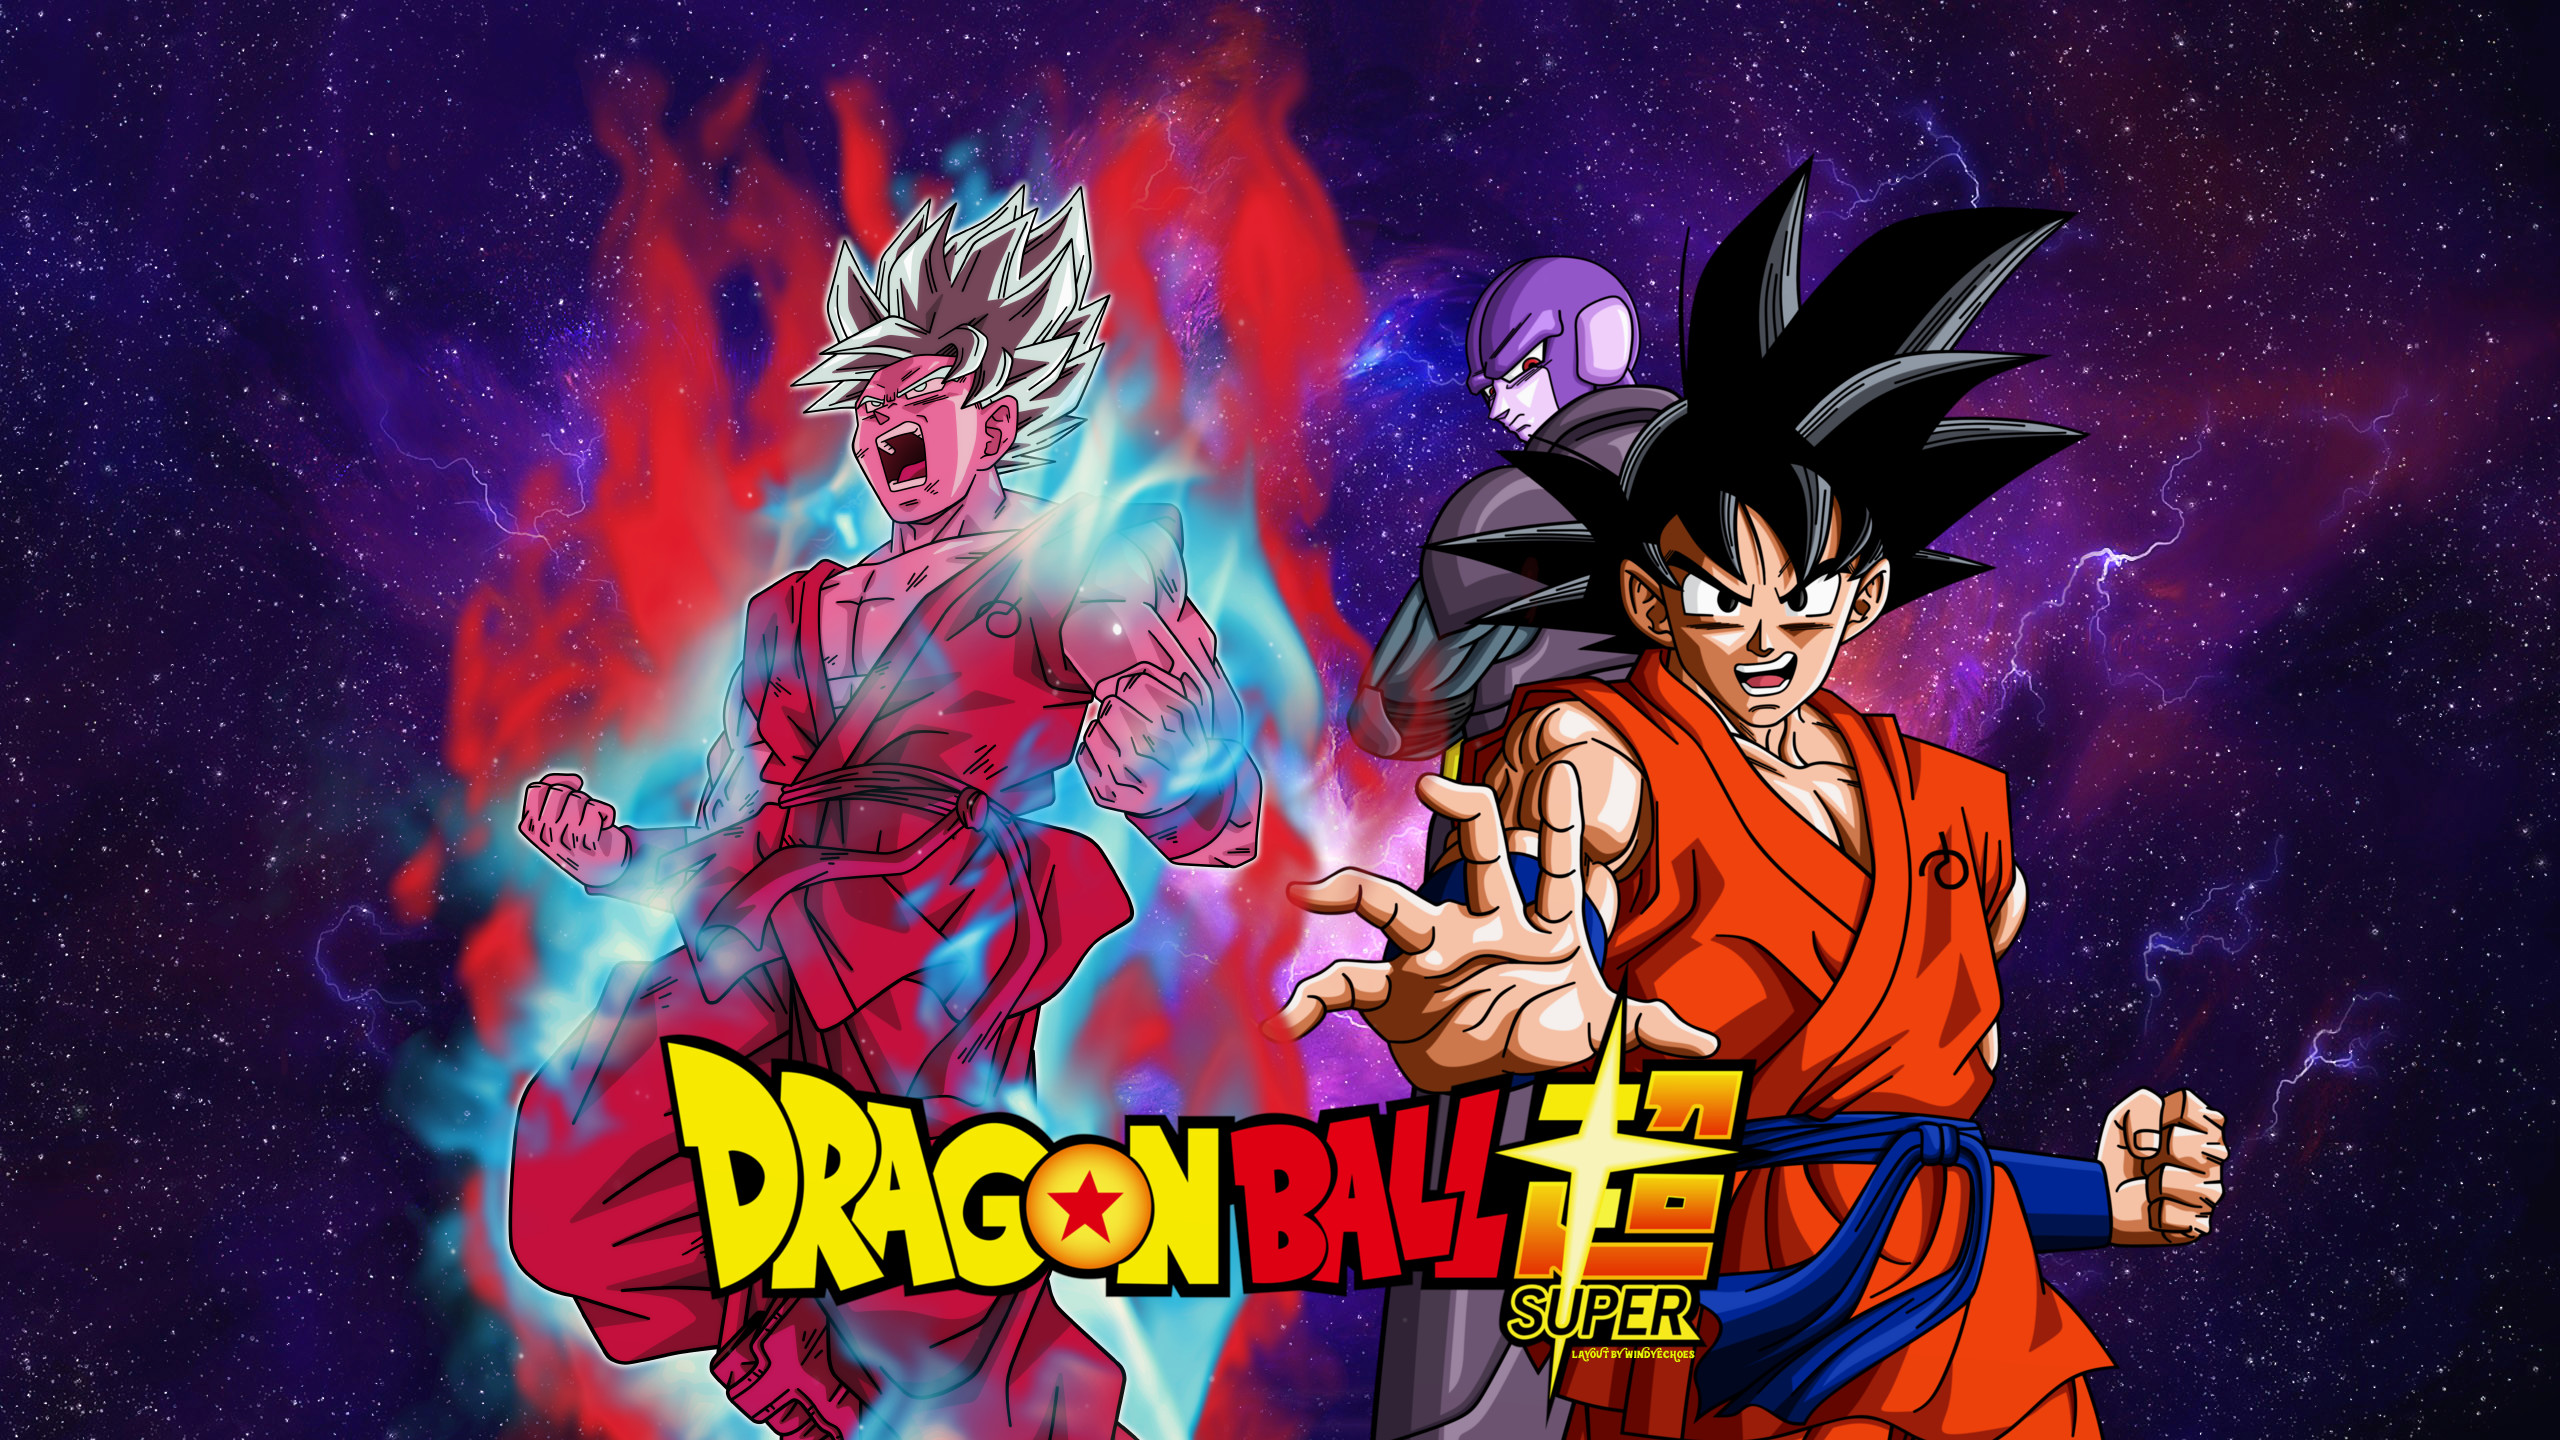 … Dragon Ball Super Wallpaper – Hit's Return by WindyEchoes